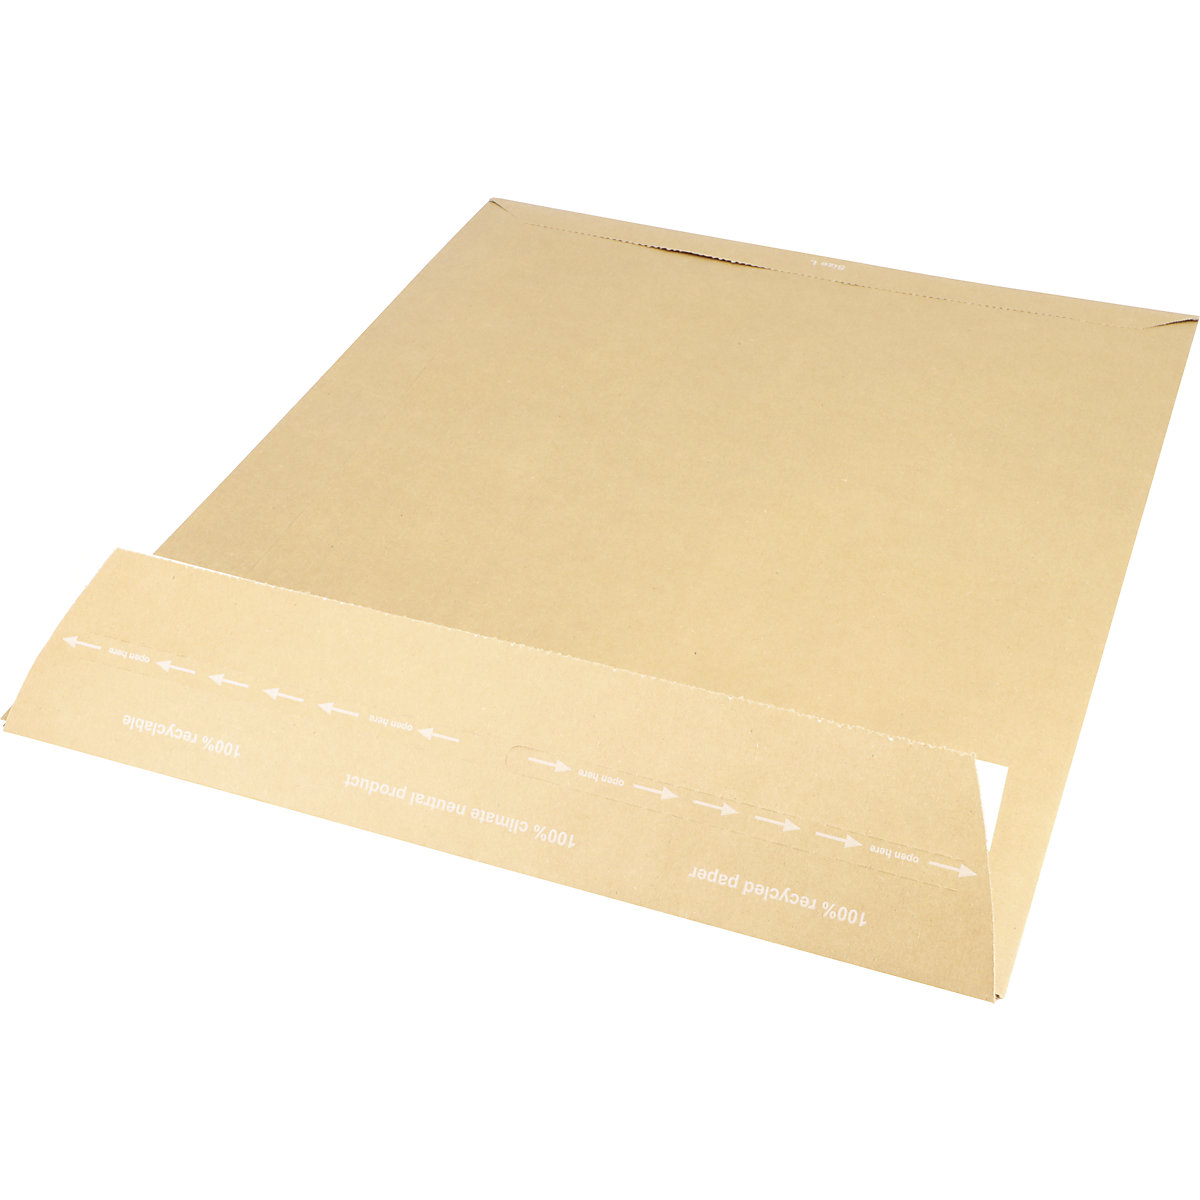 Versandtasche aus Papier E-Commerce terra, retourengeeignet, LxB 480 x 380 mm, VE 200 Stk, ab 10 VE-1